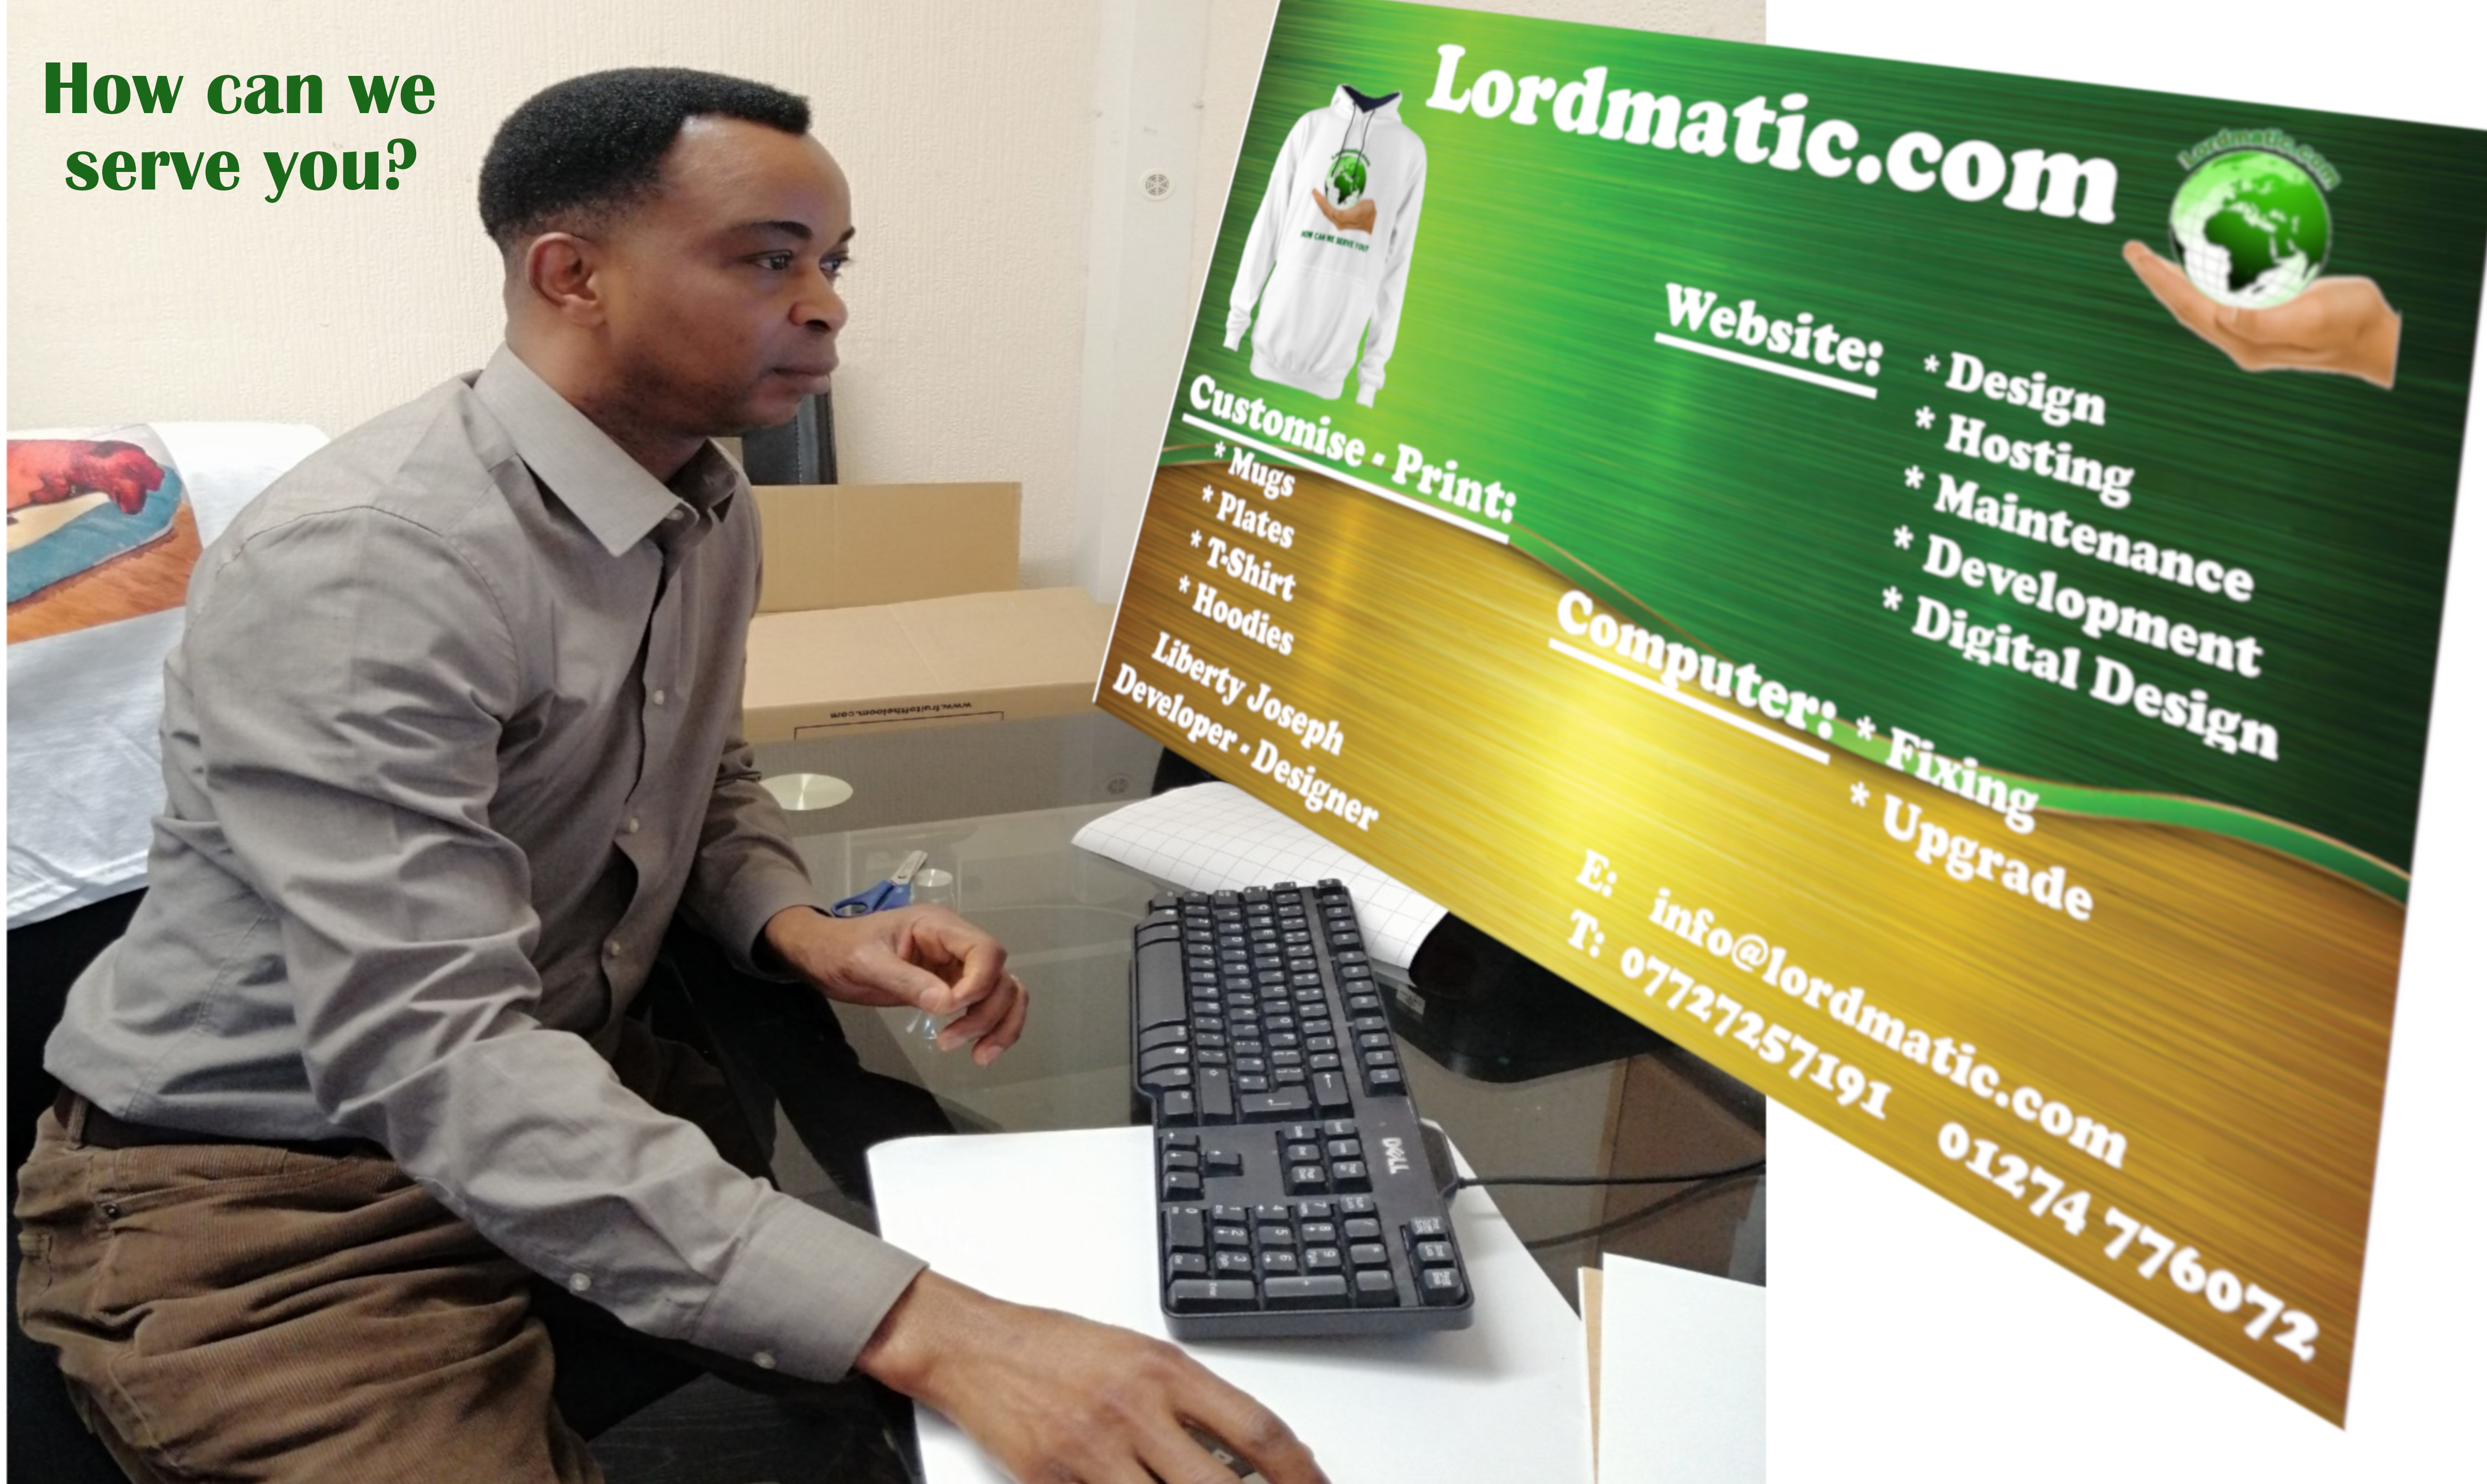 Lordmatic.com Services